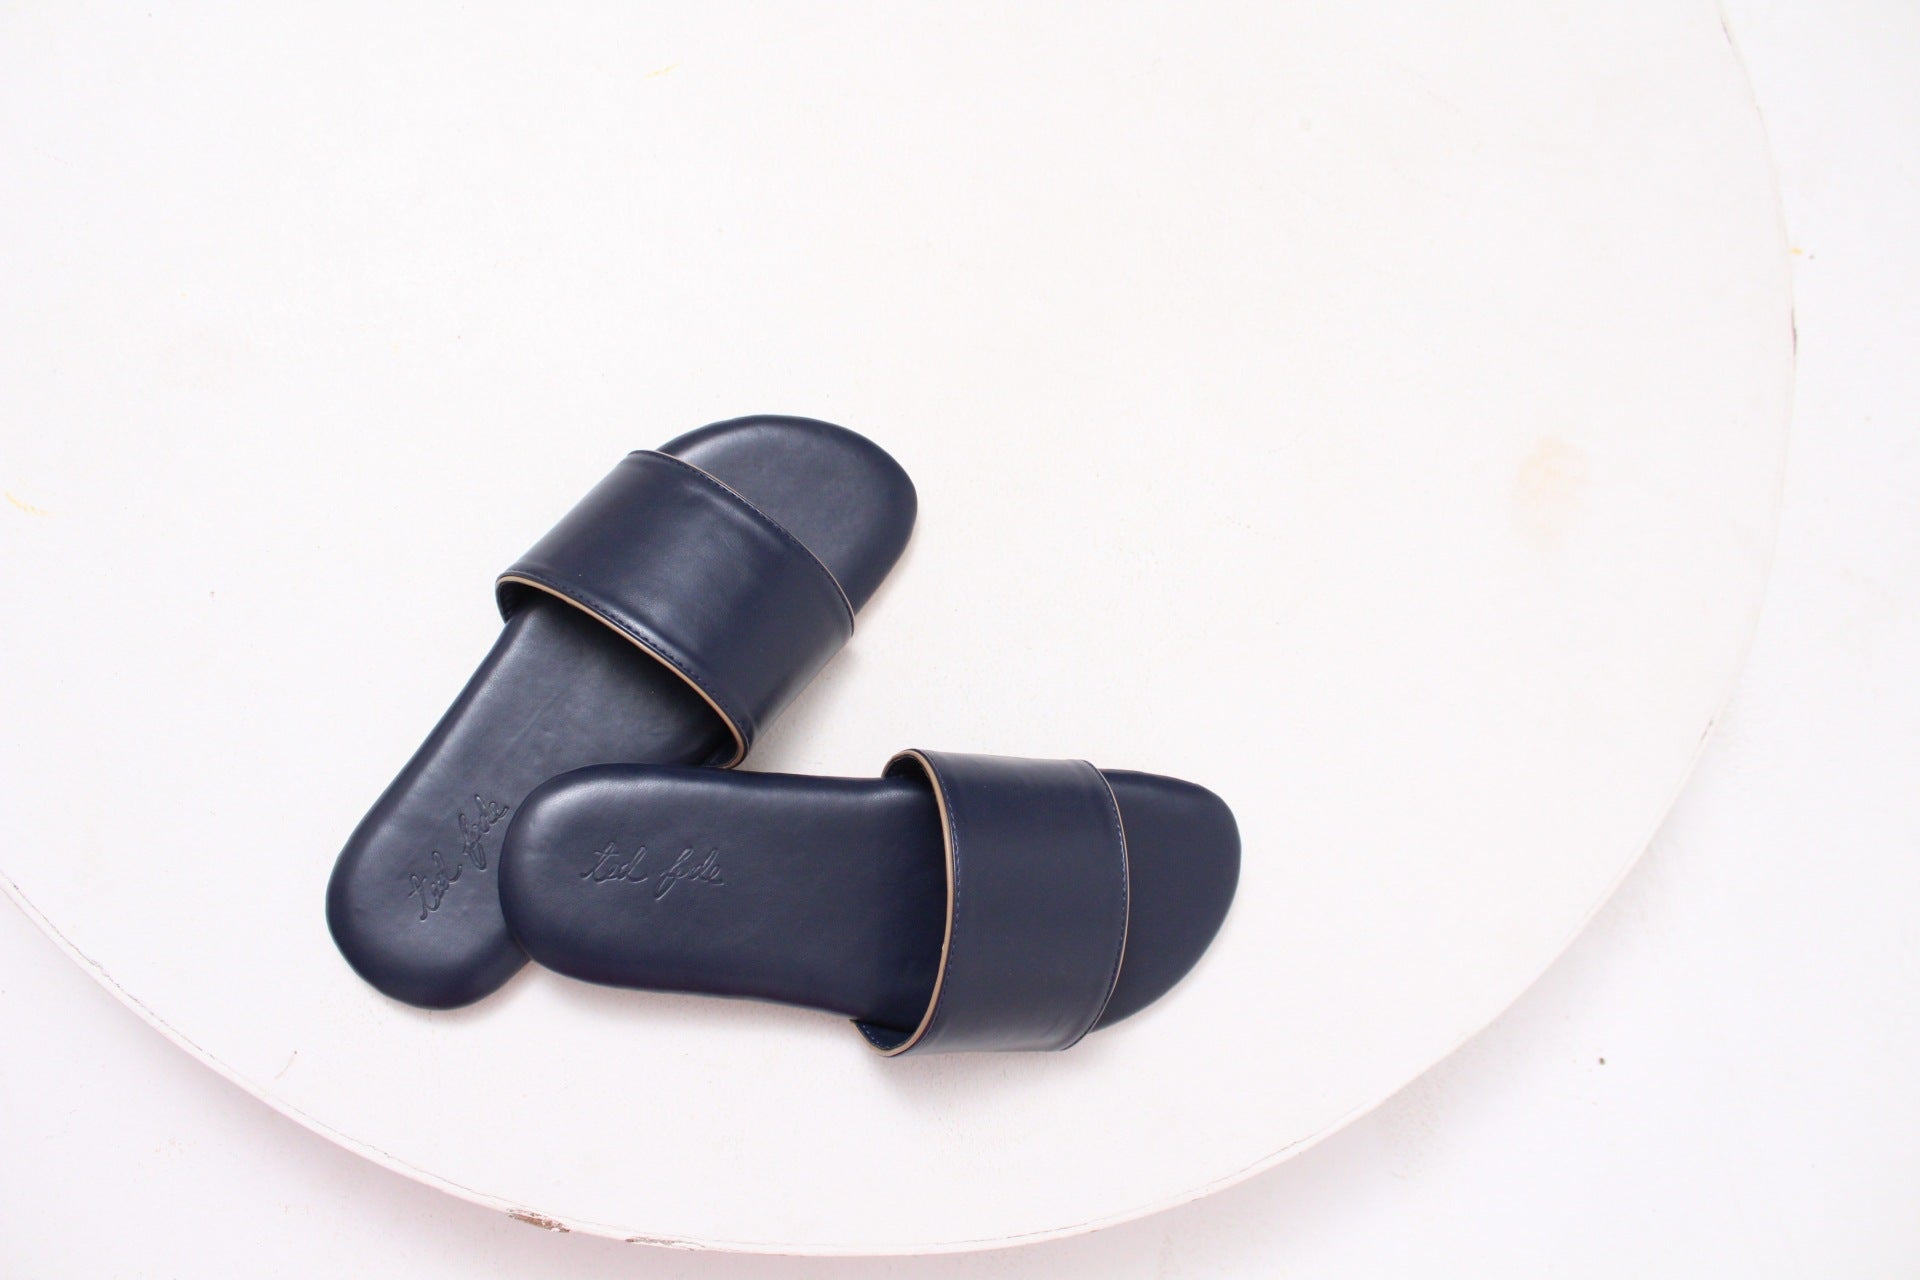 Cobalt Comfort PU Sandals for Men